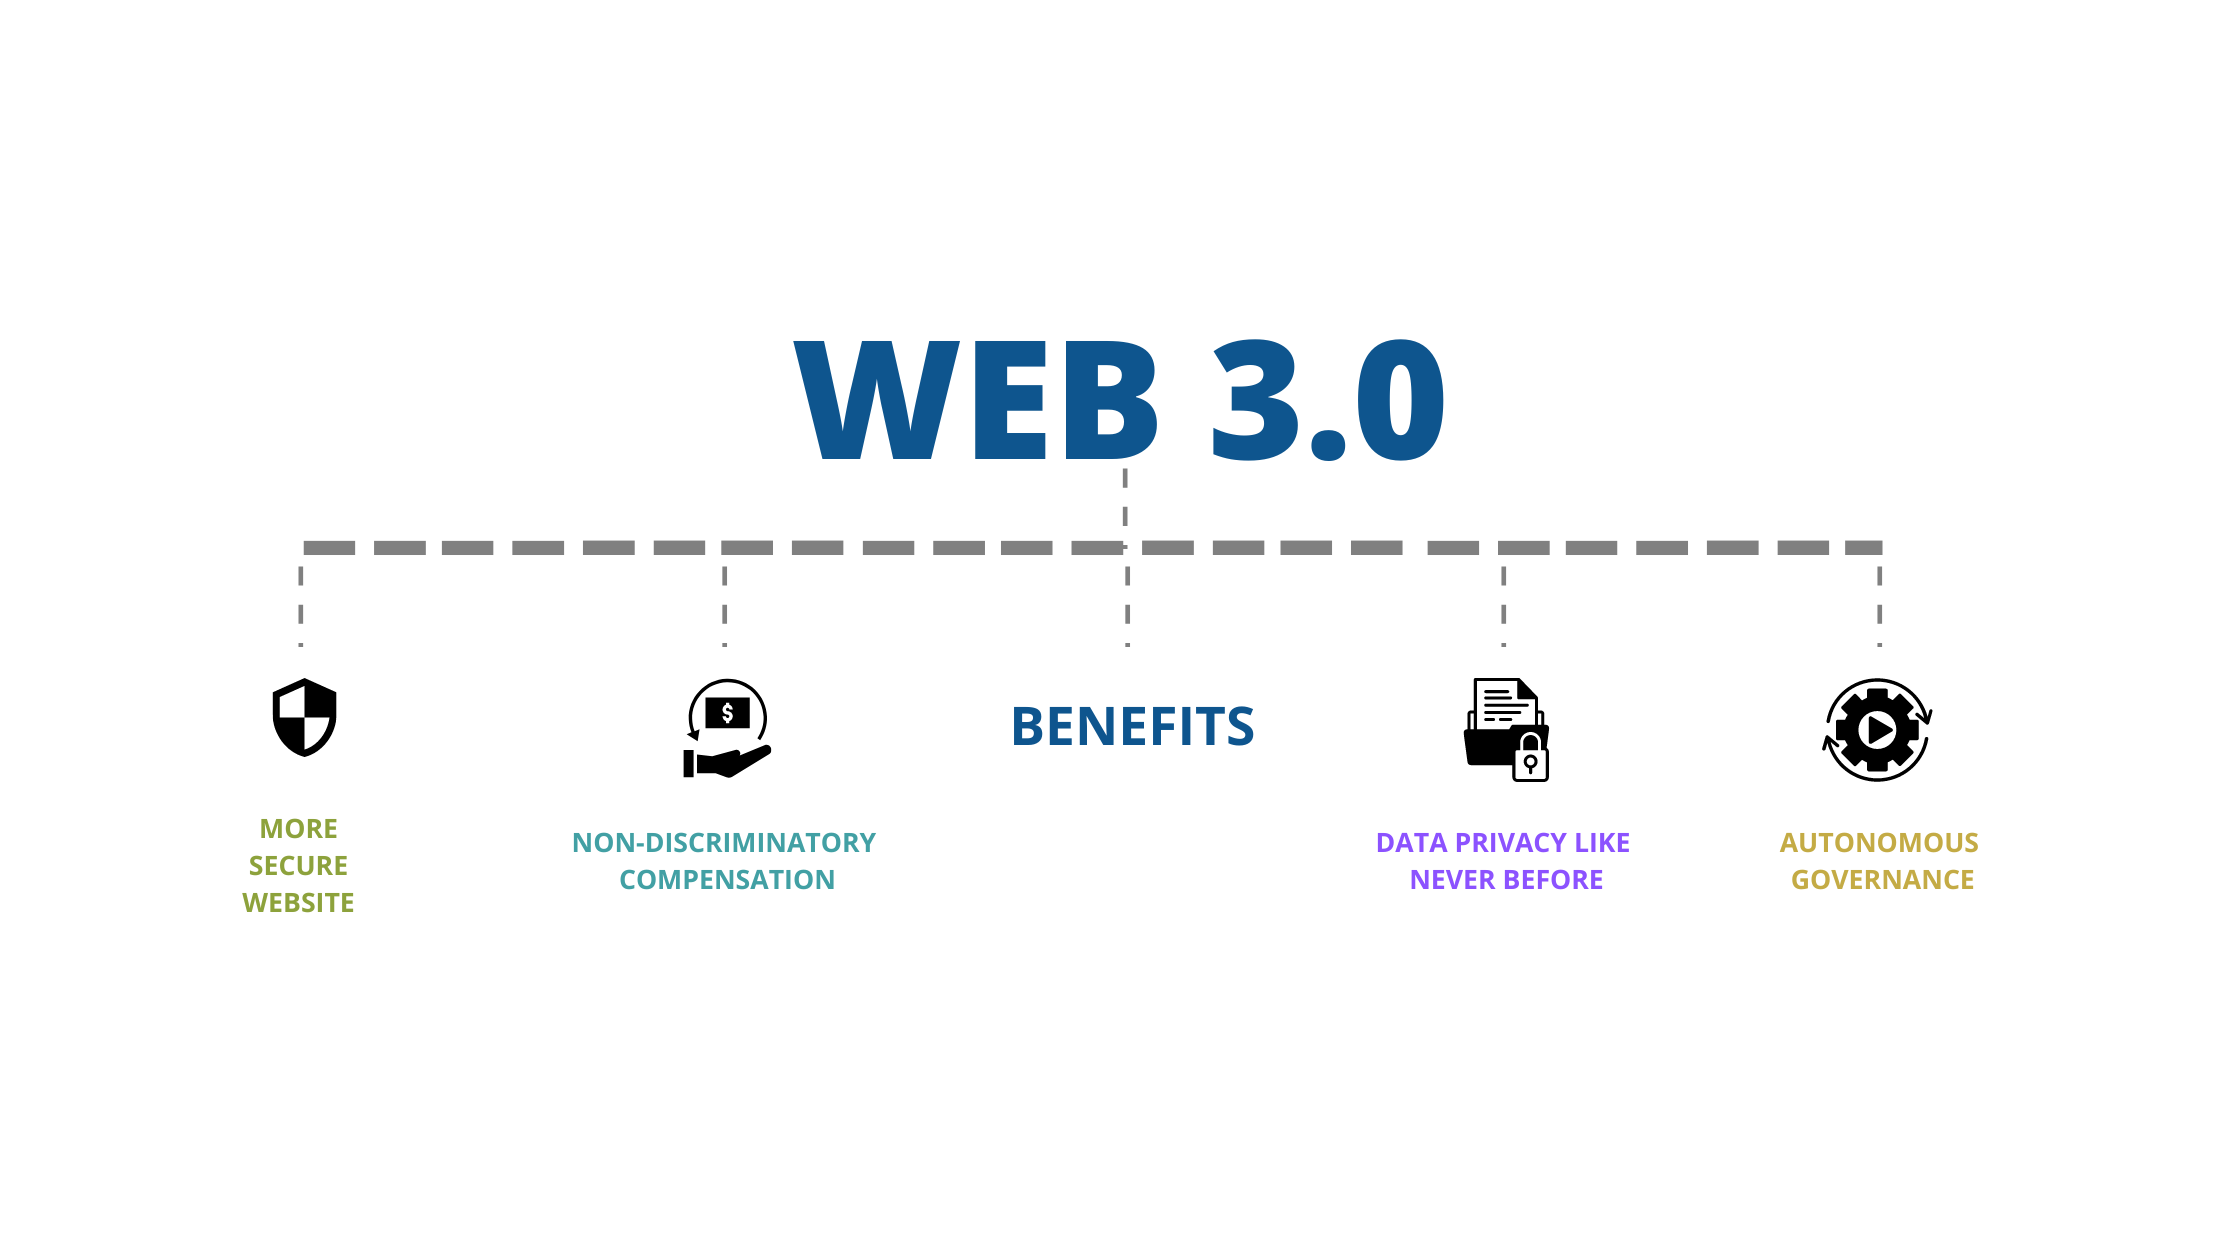 WEB 3.0 BENEFITS